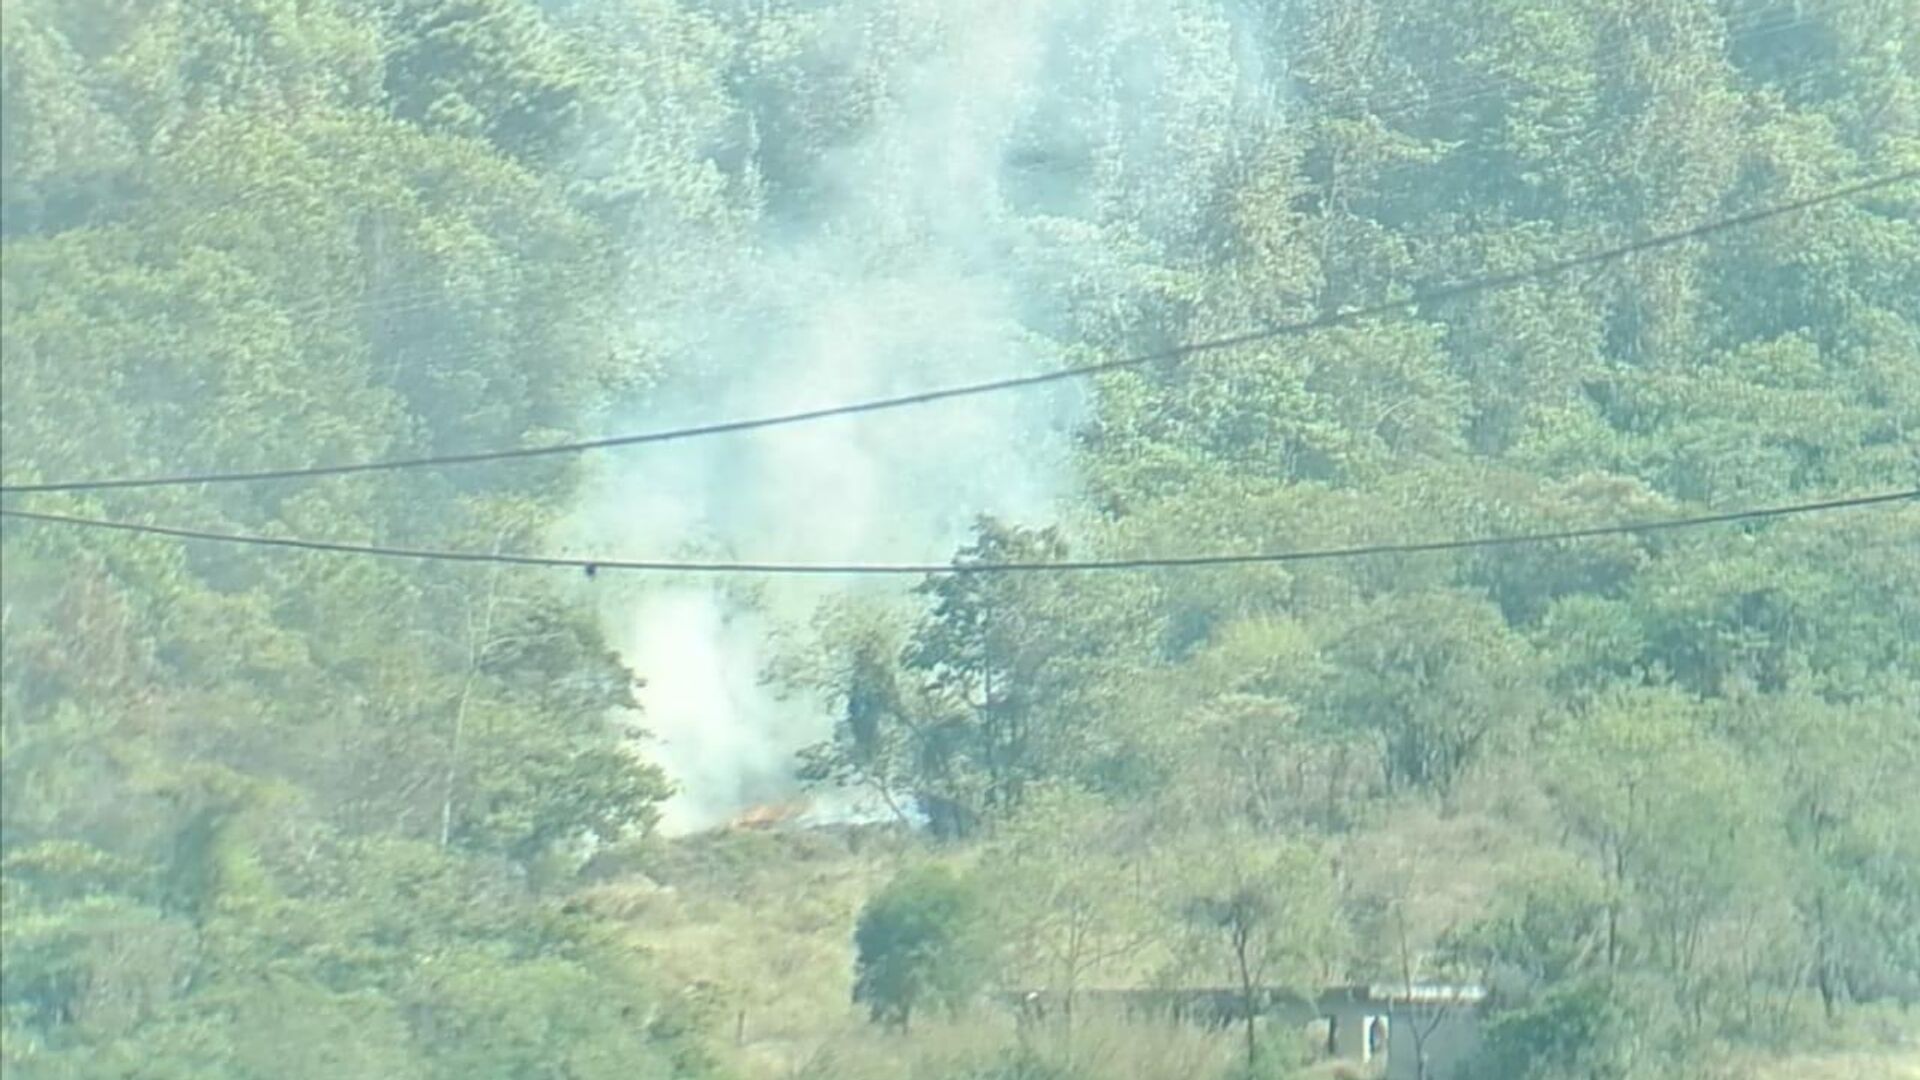 Incendio provocado en la zona disputada de Aldama, Chiapas. - Sputnik Mundo, 1920, 04.12.2021